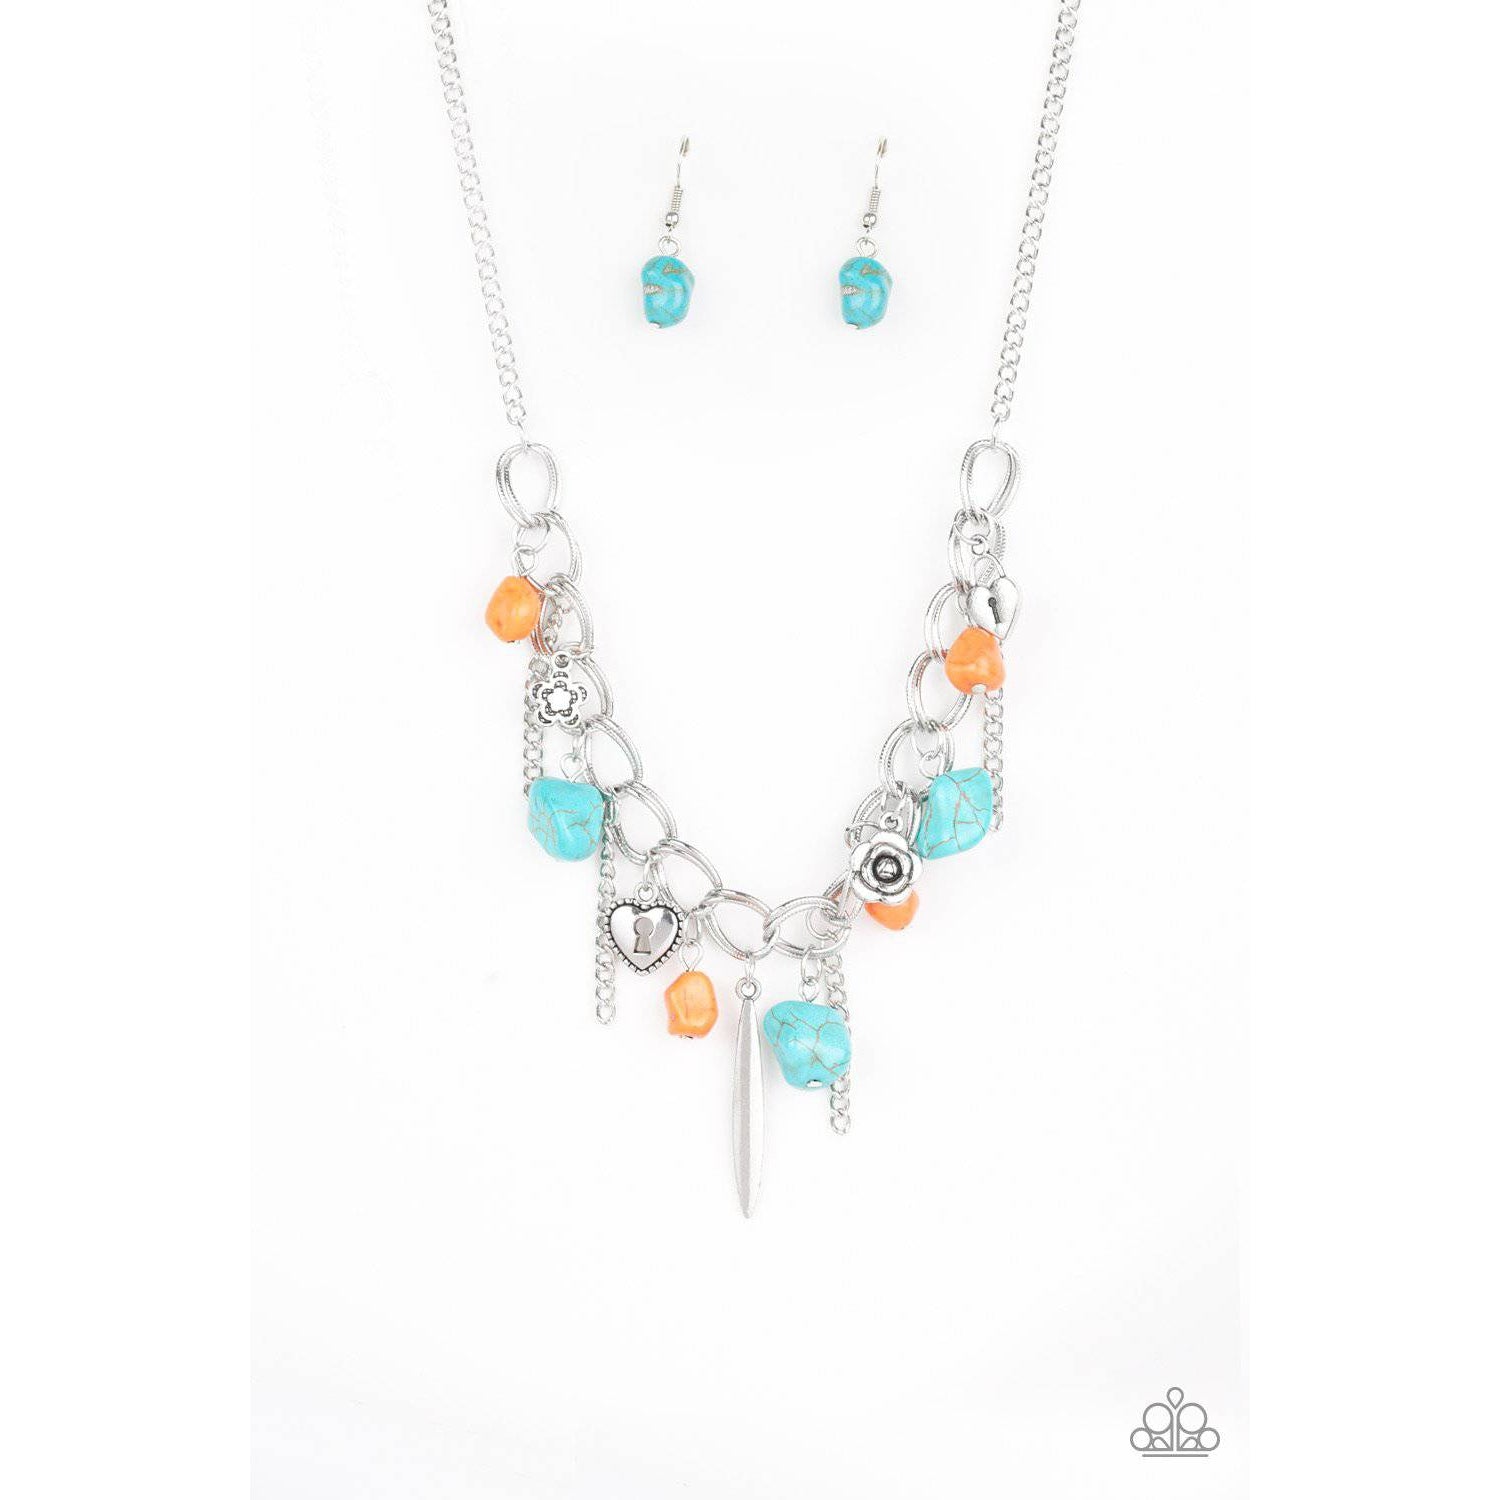 Southern Sweetheart - Multi Necklace - Paparazzi Accessories - GlaMarous Titi Jewels